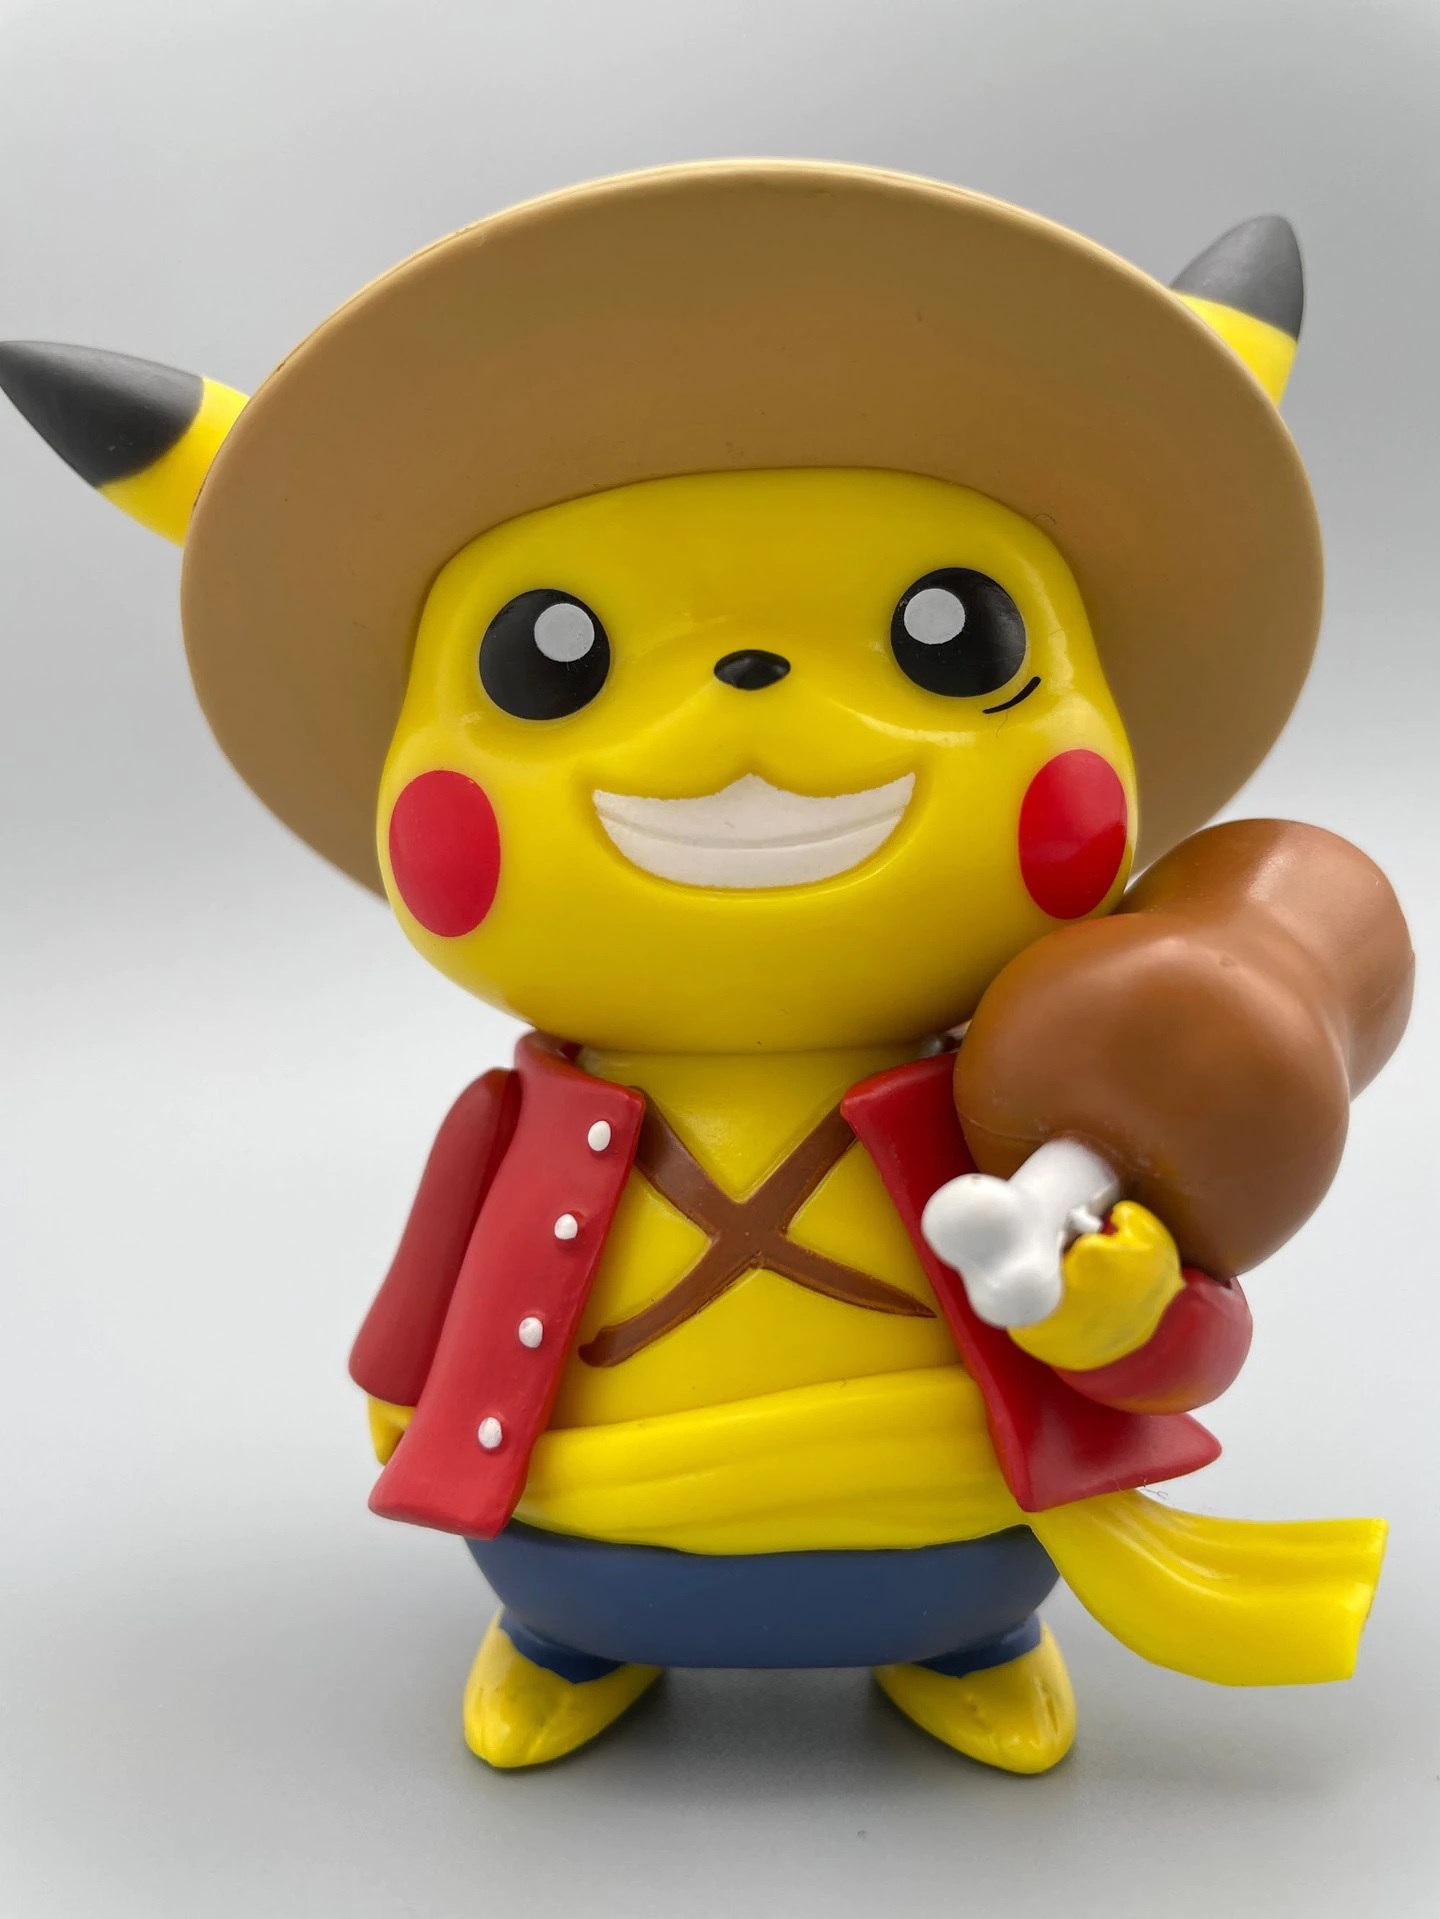 Pokémon's Post-Ash Ketchum Anime Is Getting an All New Pikachu - IGN-demhanvico.com.vn